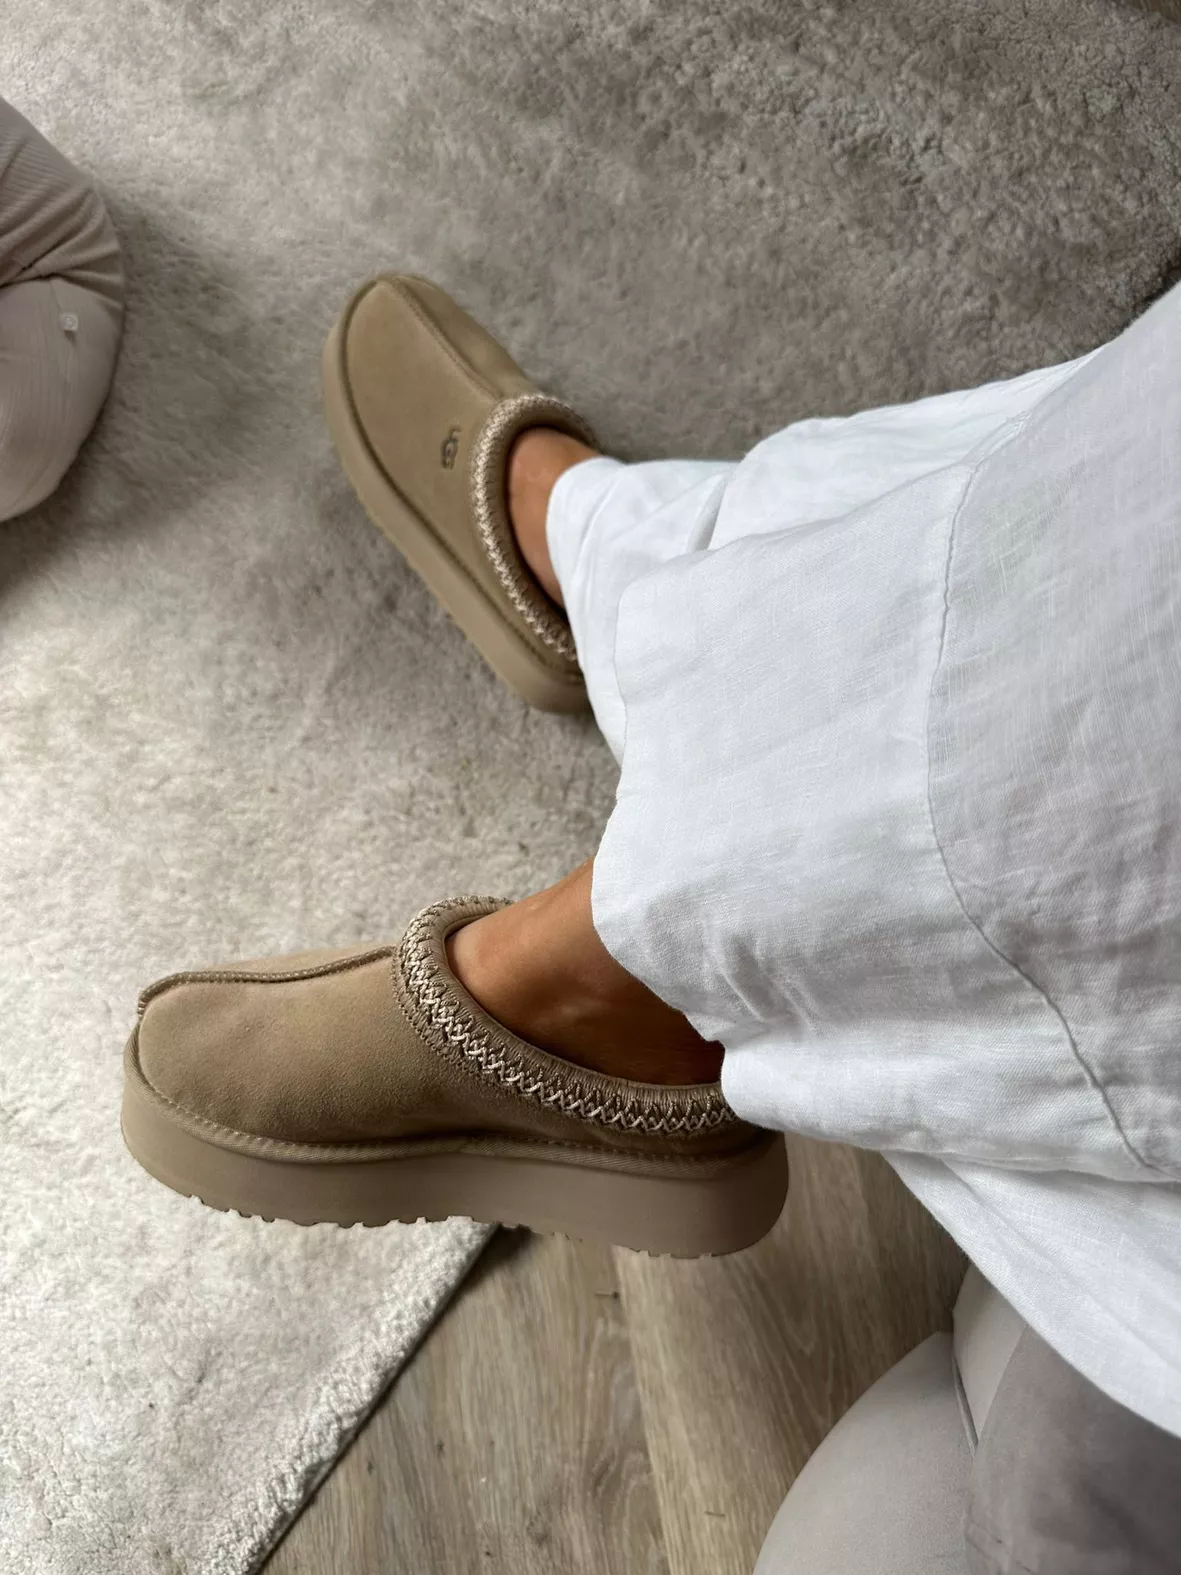 The UGG Tasman/Tazz: how to wear the new trendy slipper?